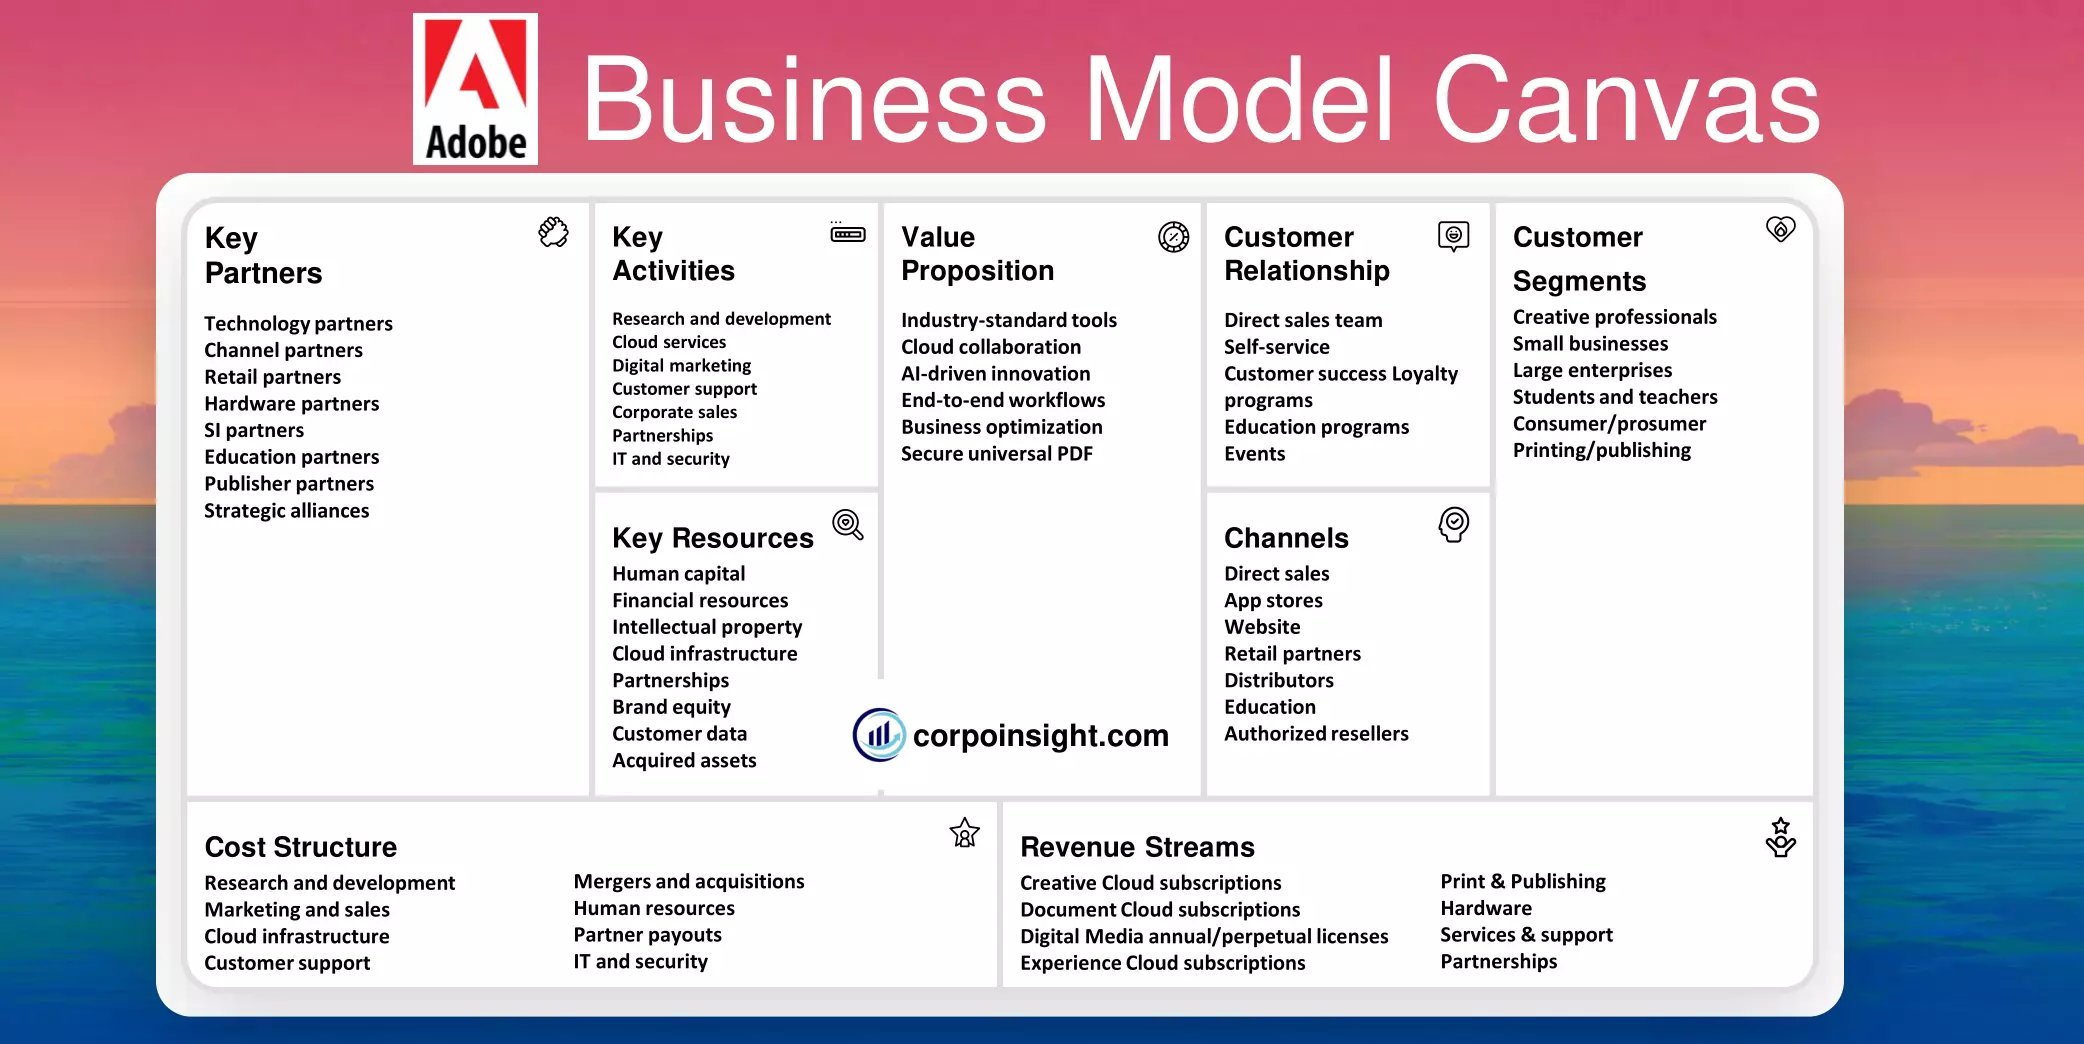 Adobe Business Model Canvas